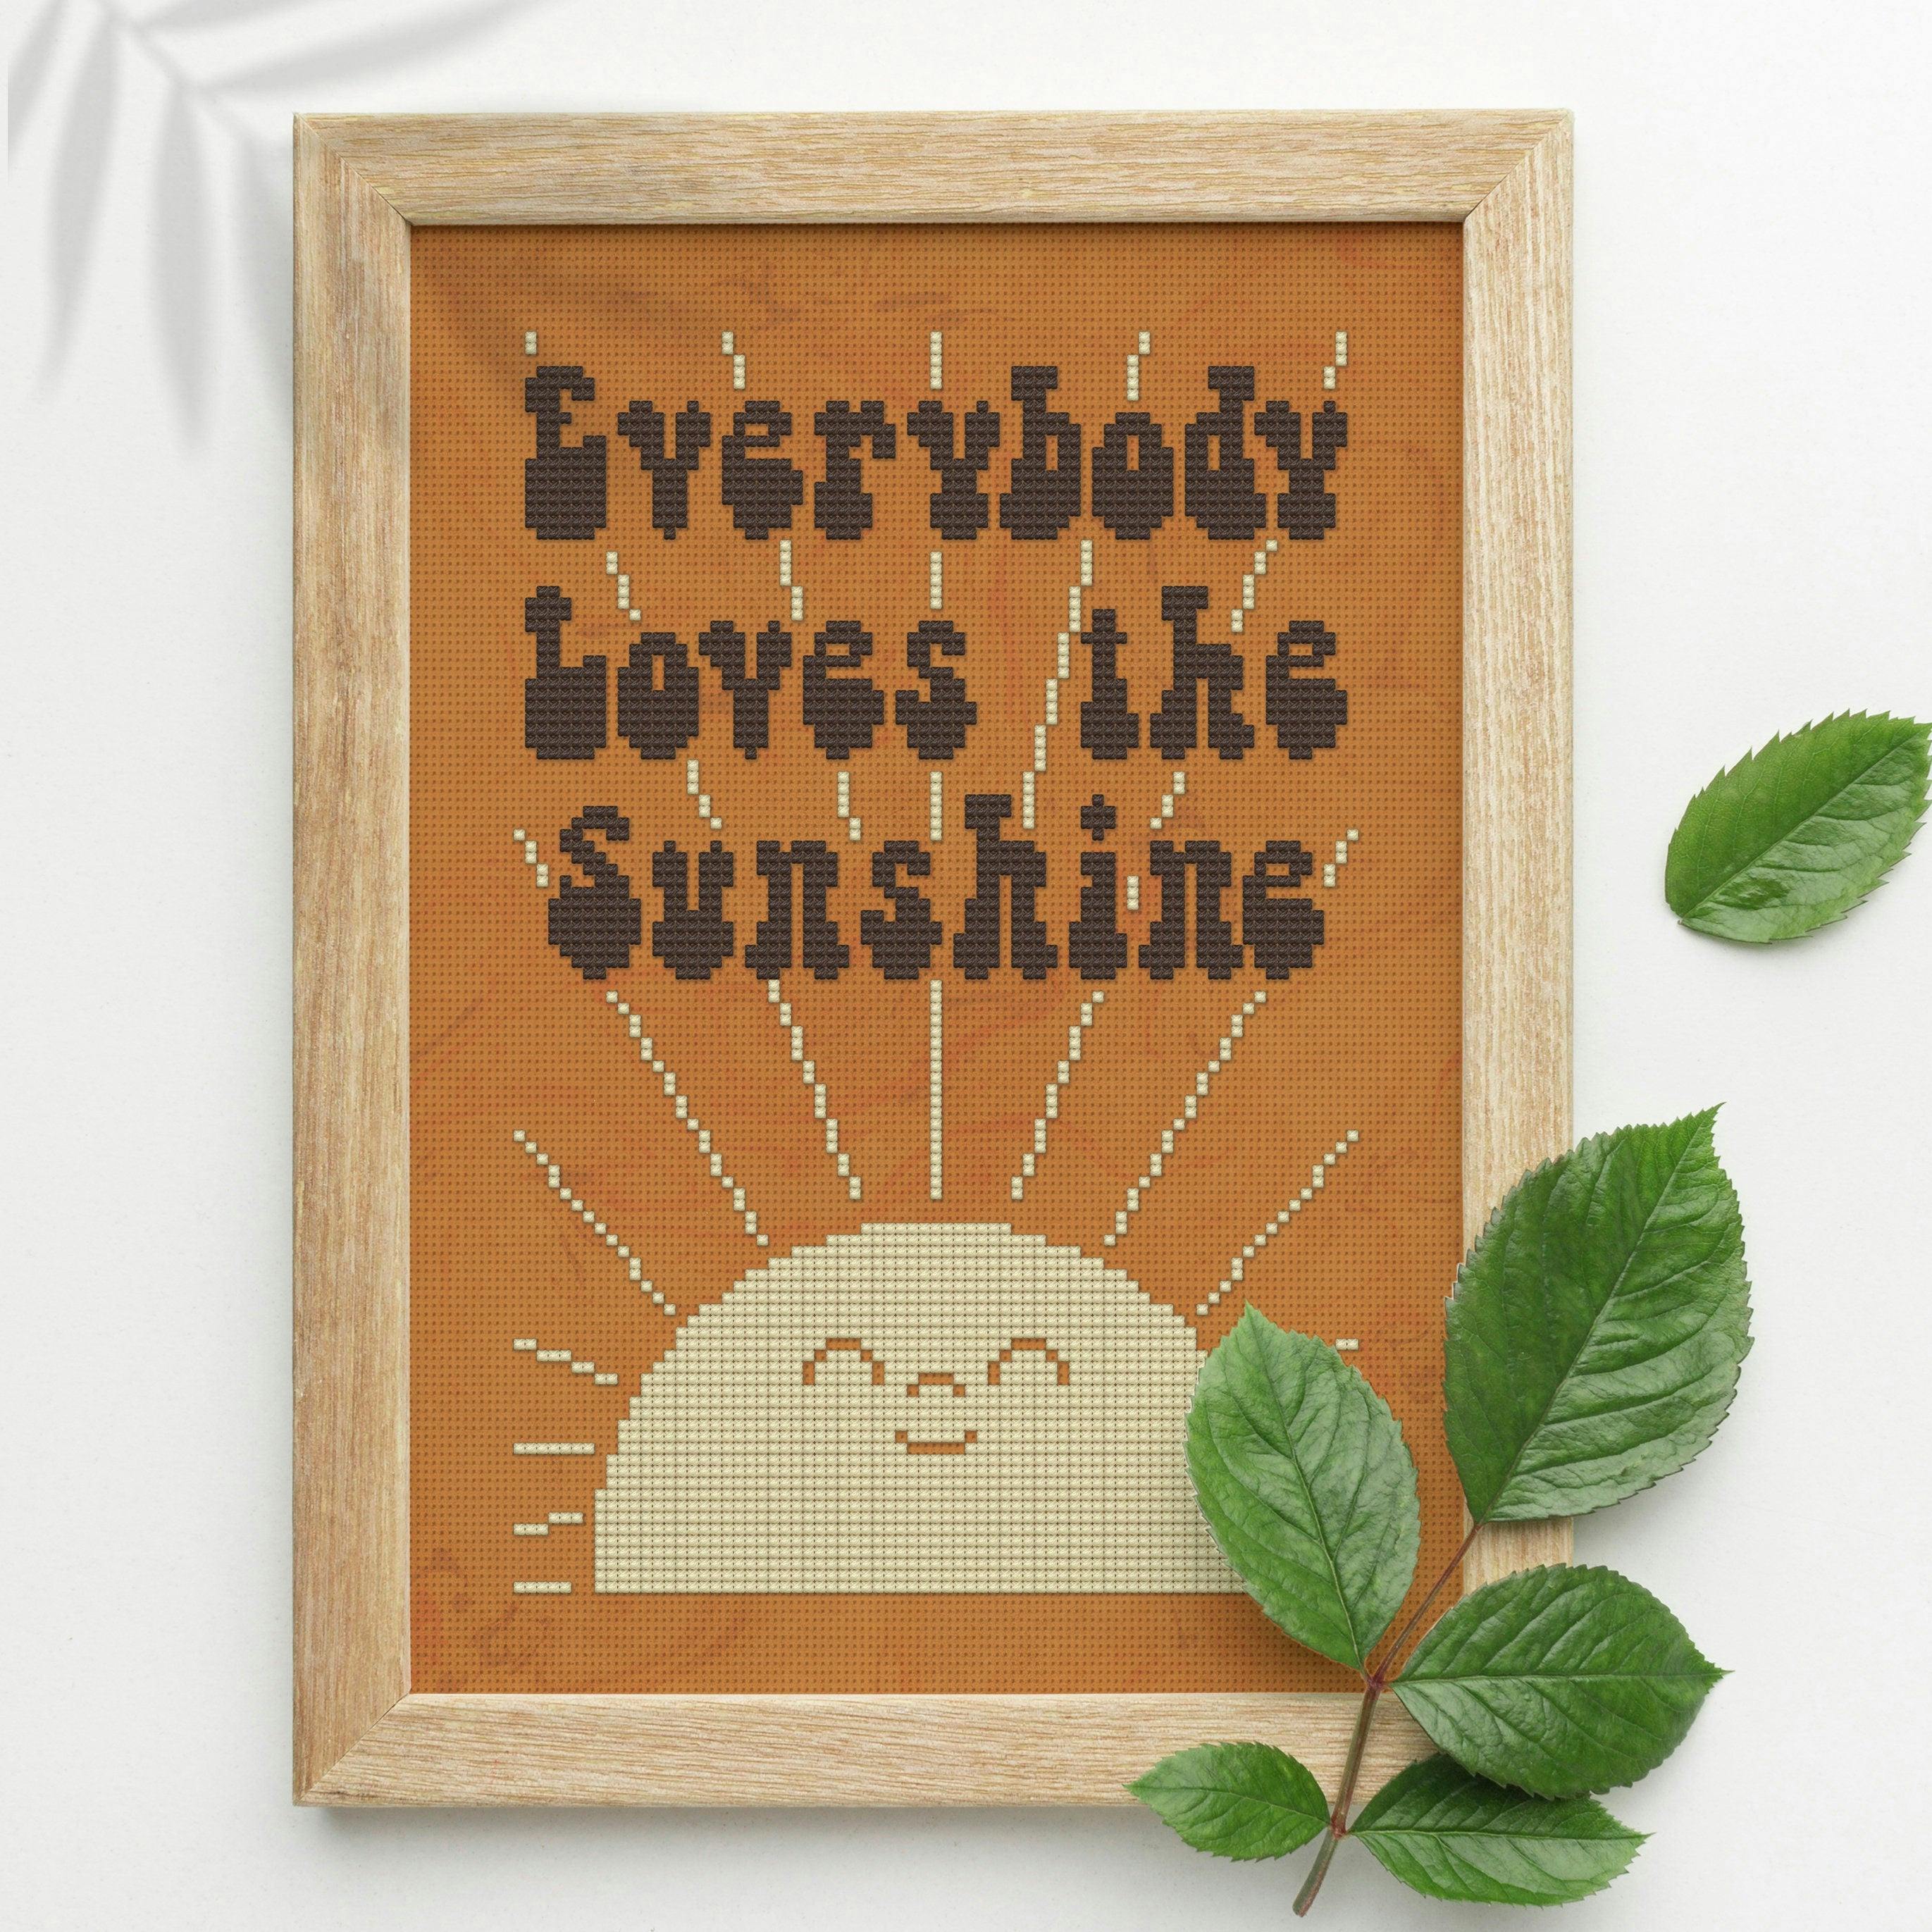 Everybody Loves the Sunshine